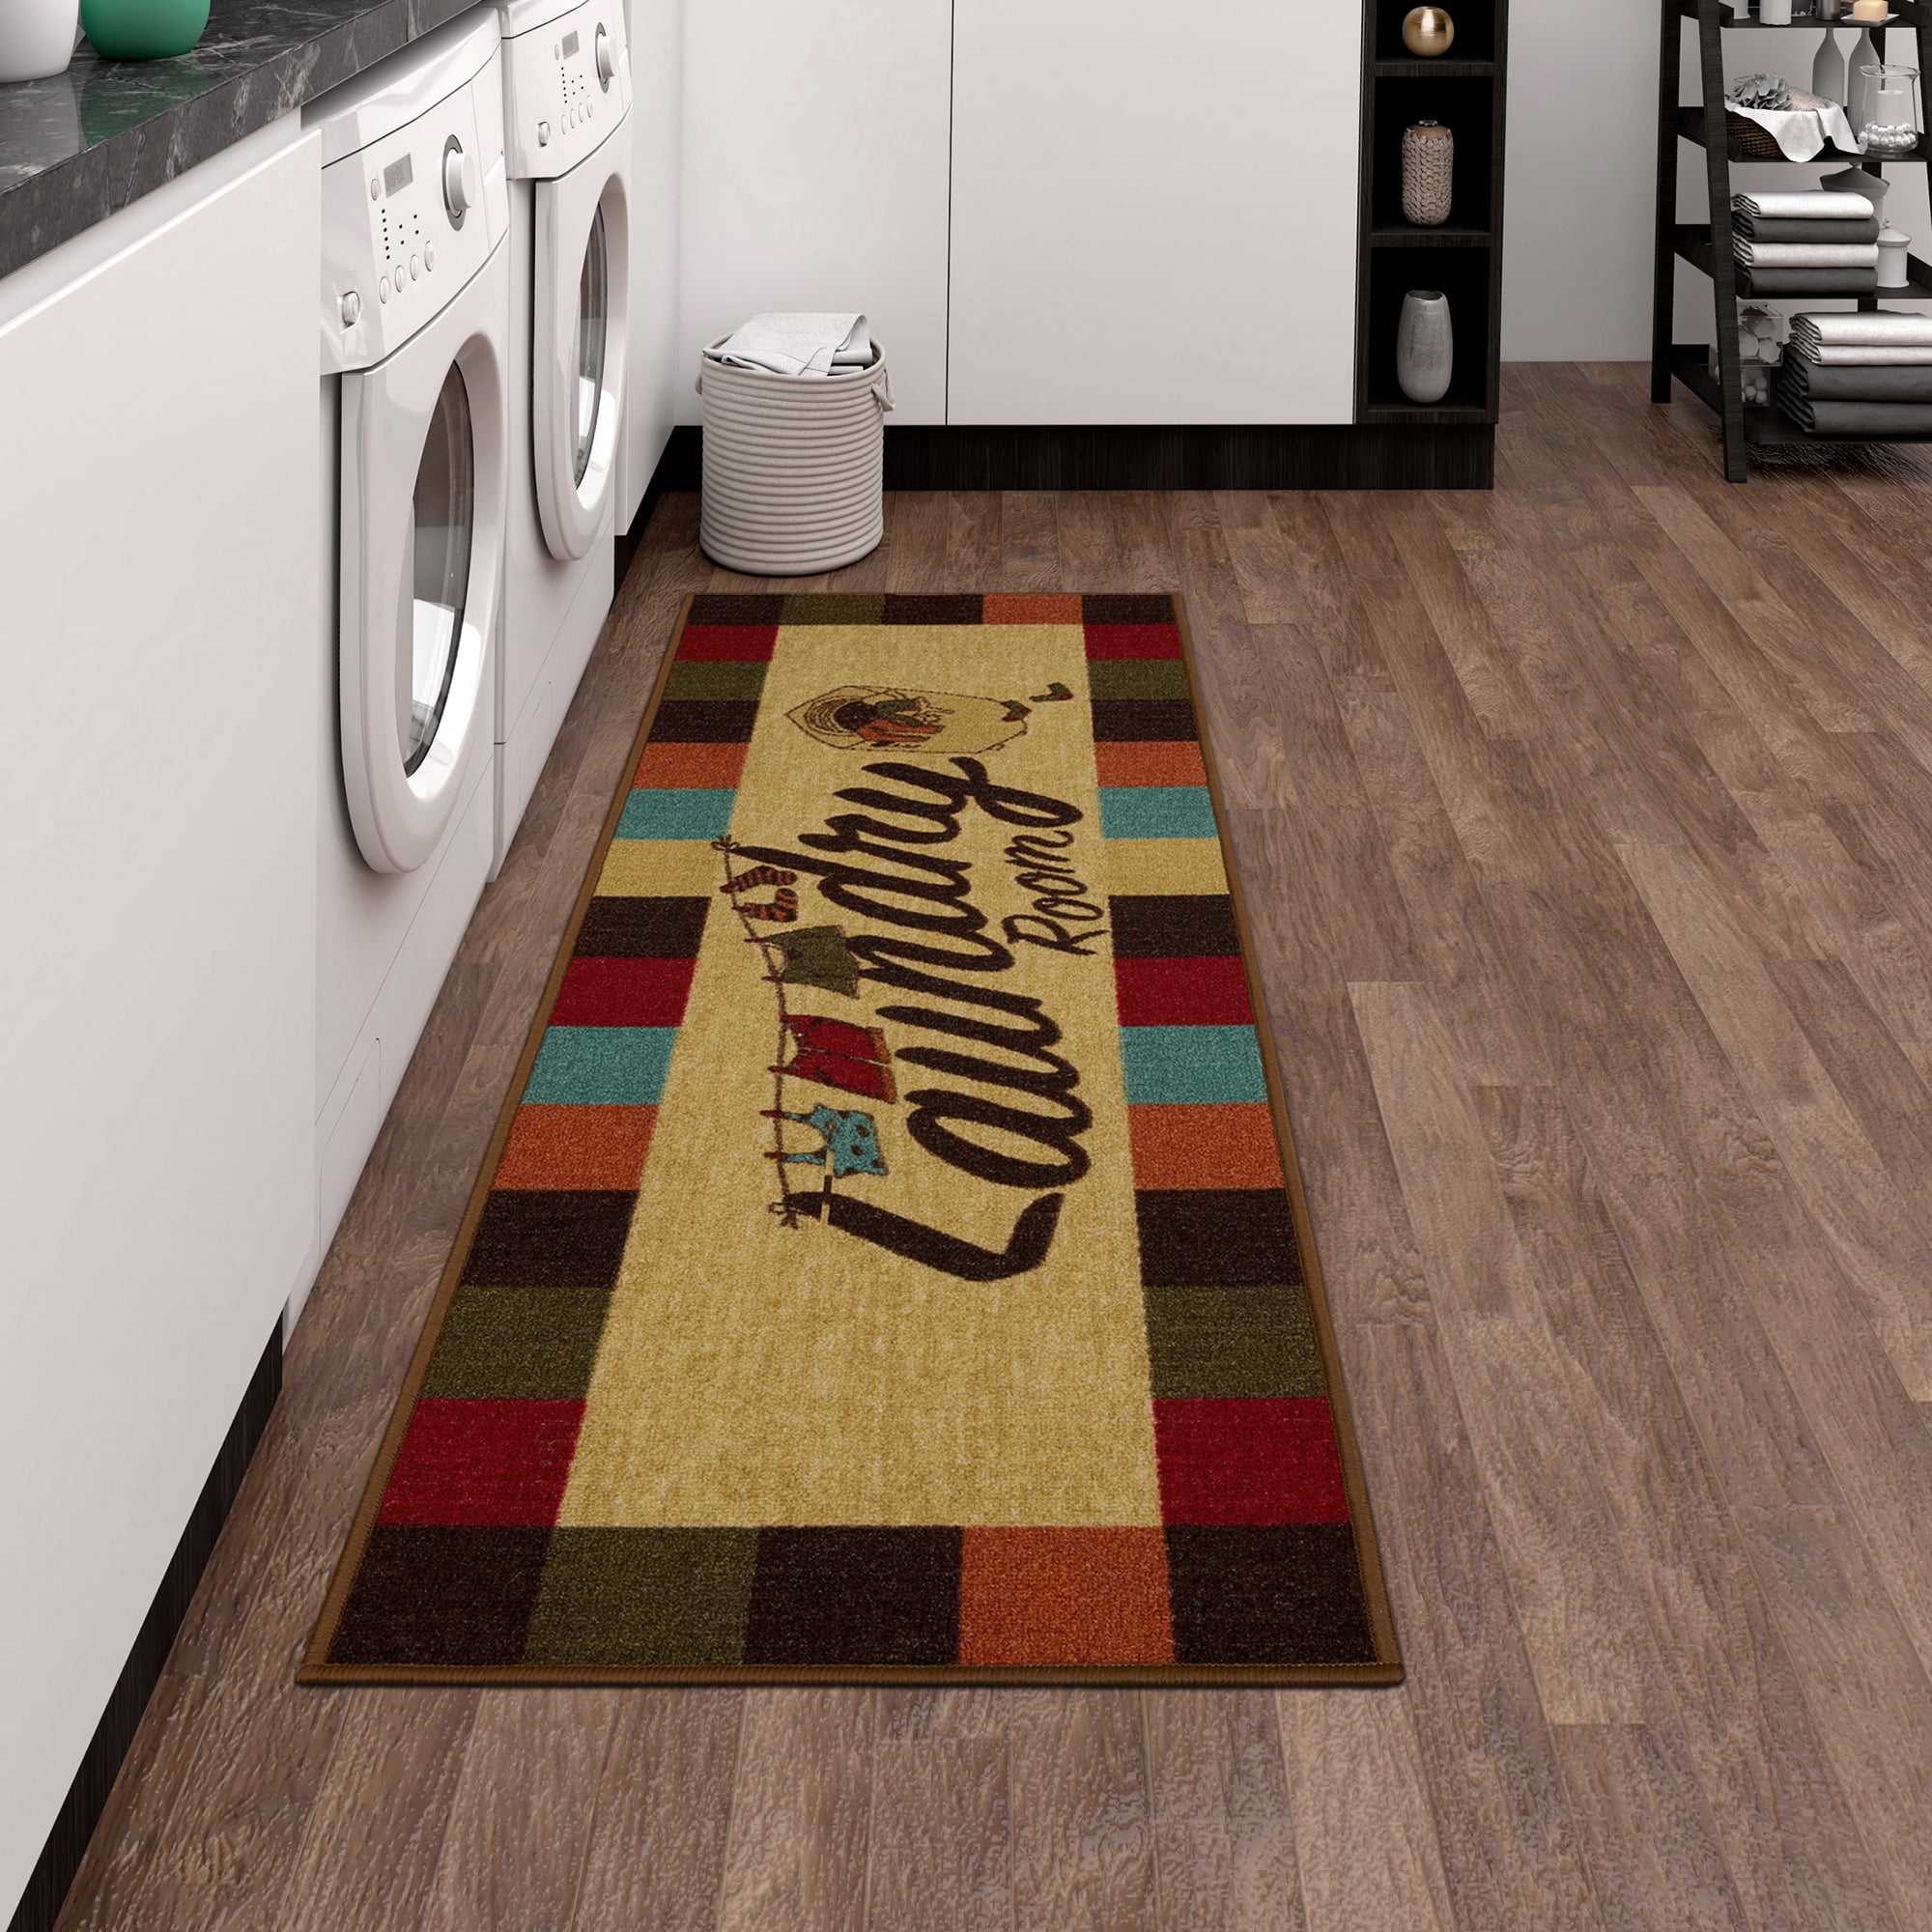 laundry room rug